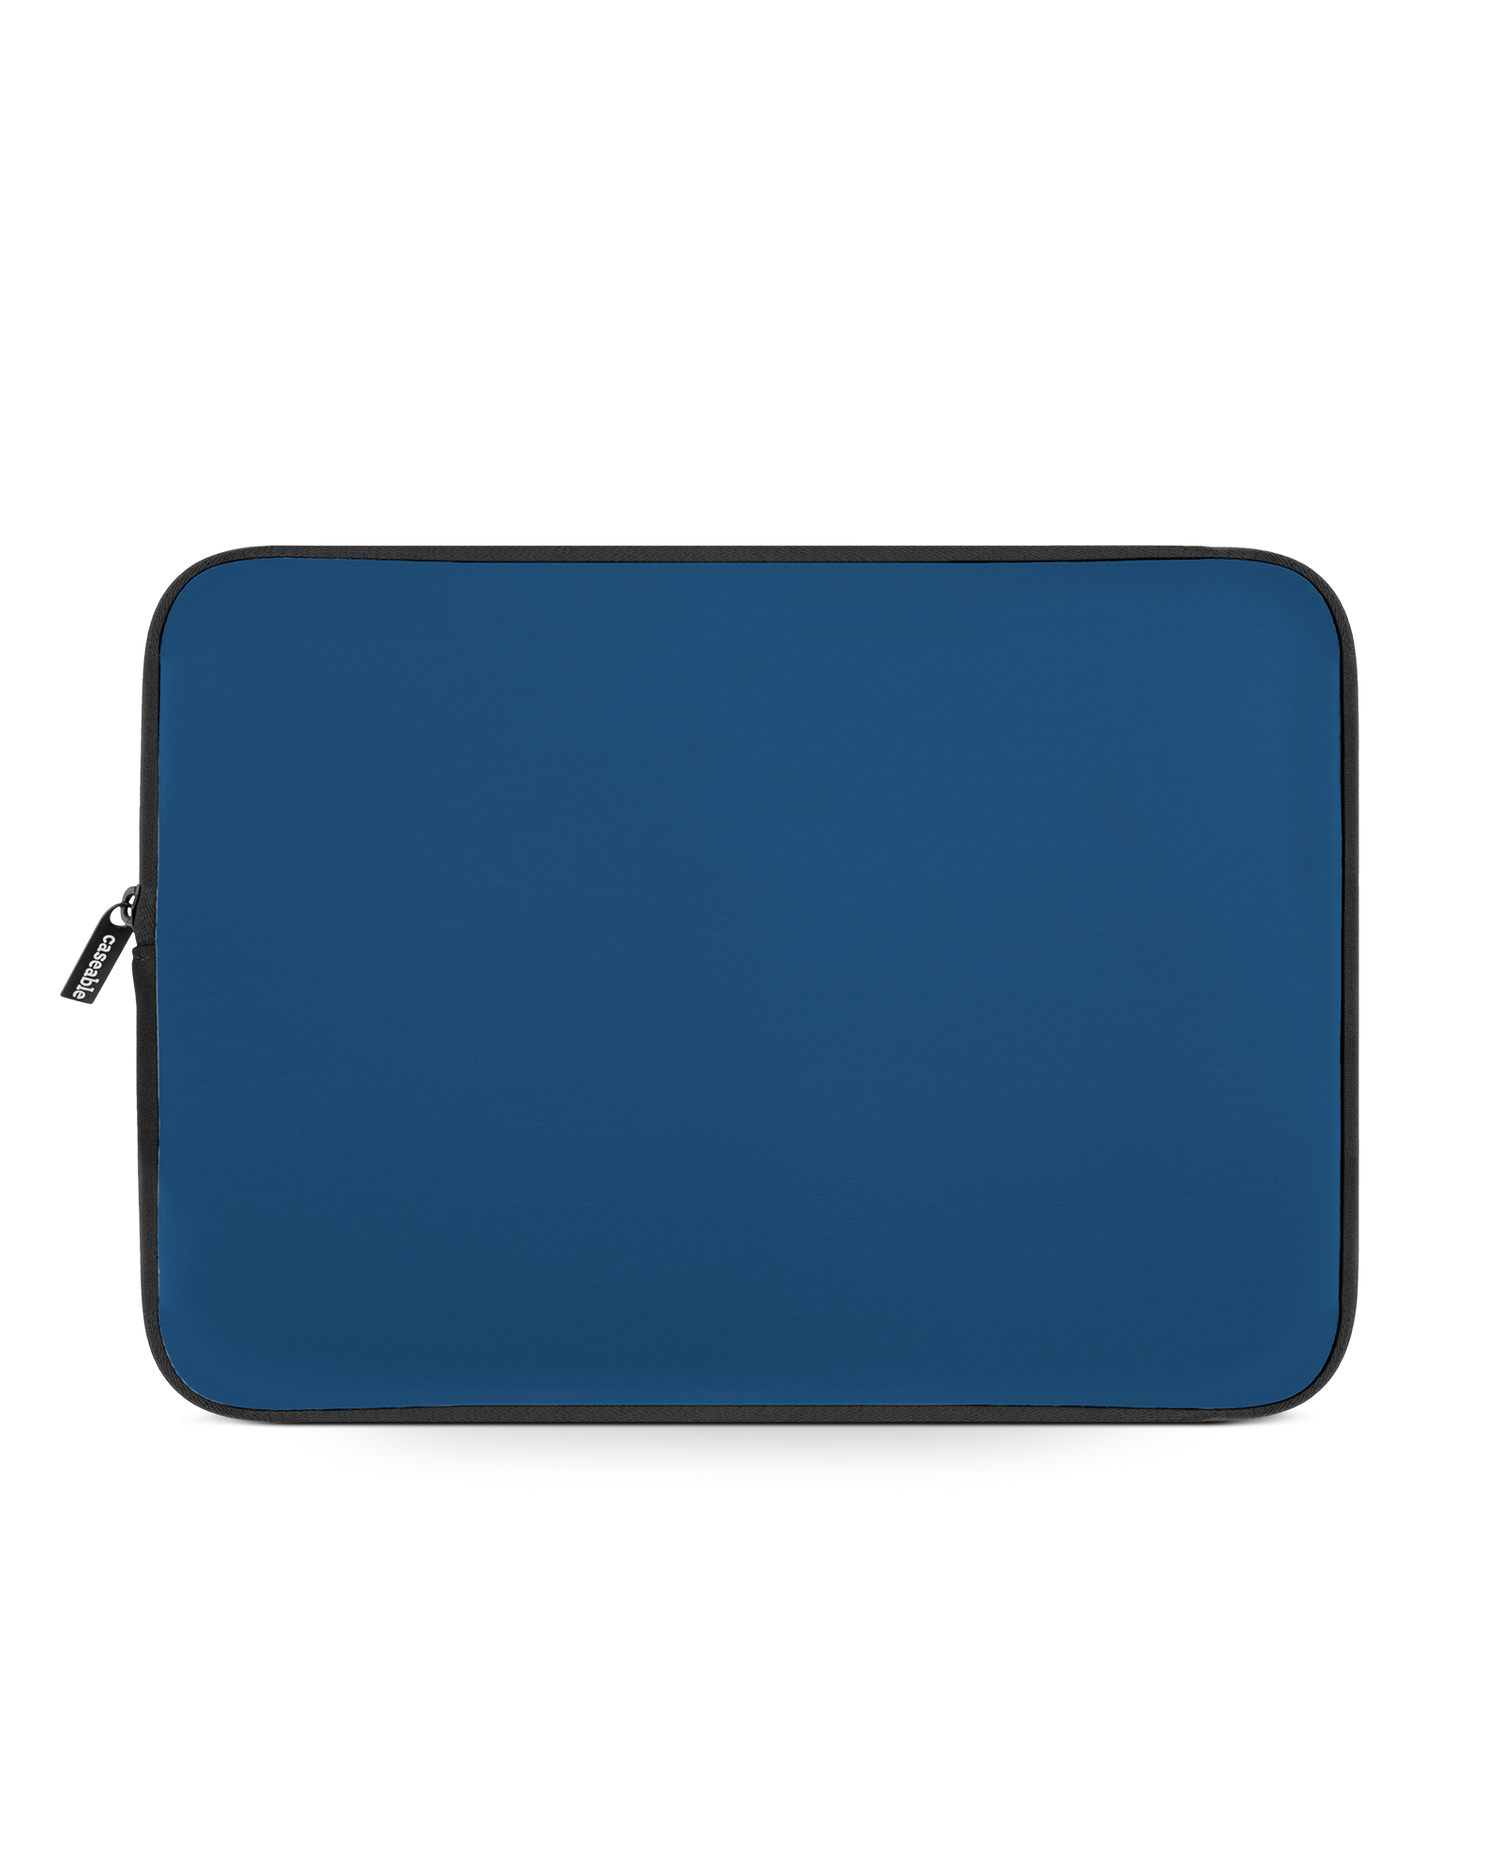 CLASSIC BLUE Laptop Case 13-14 inch: Front View